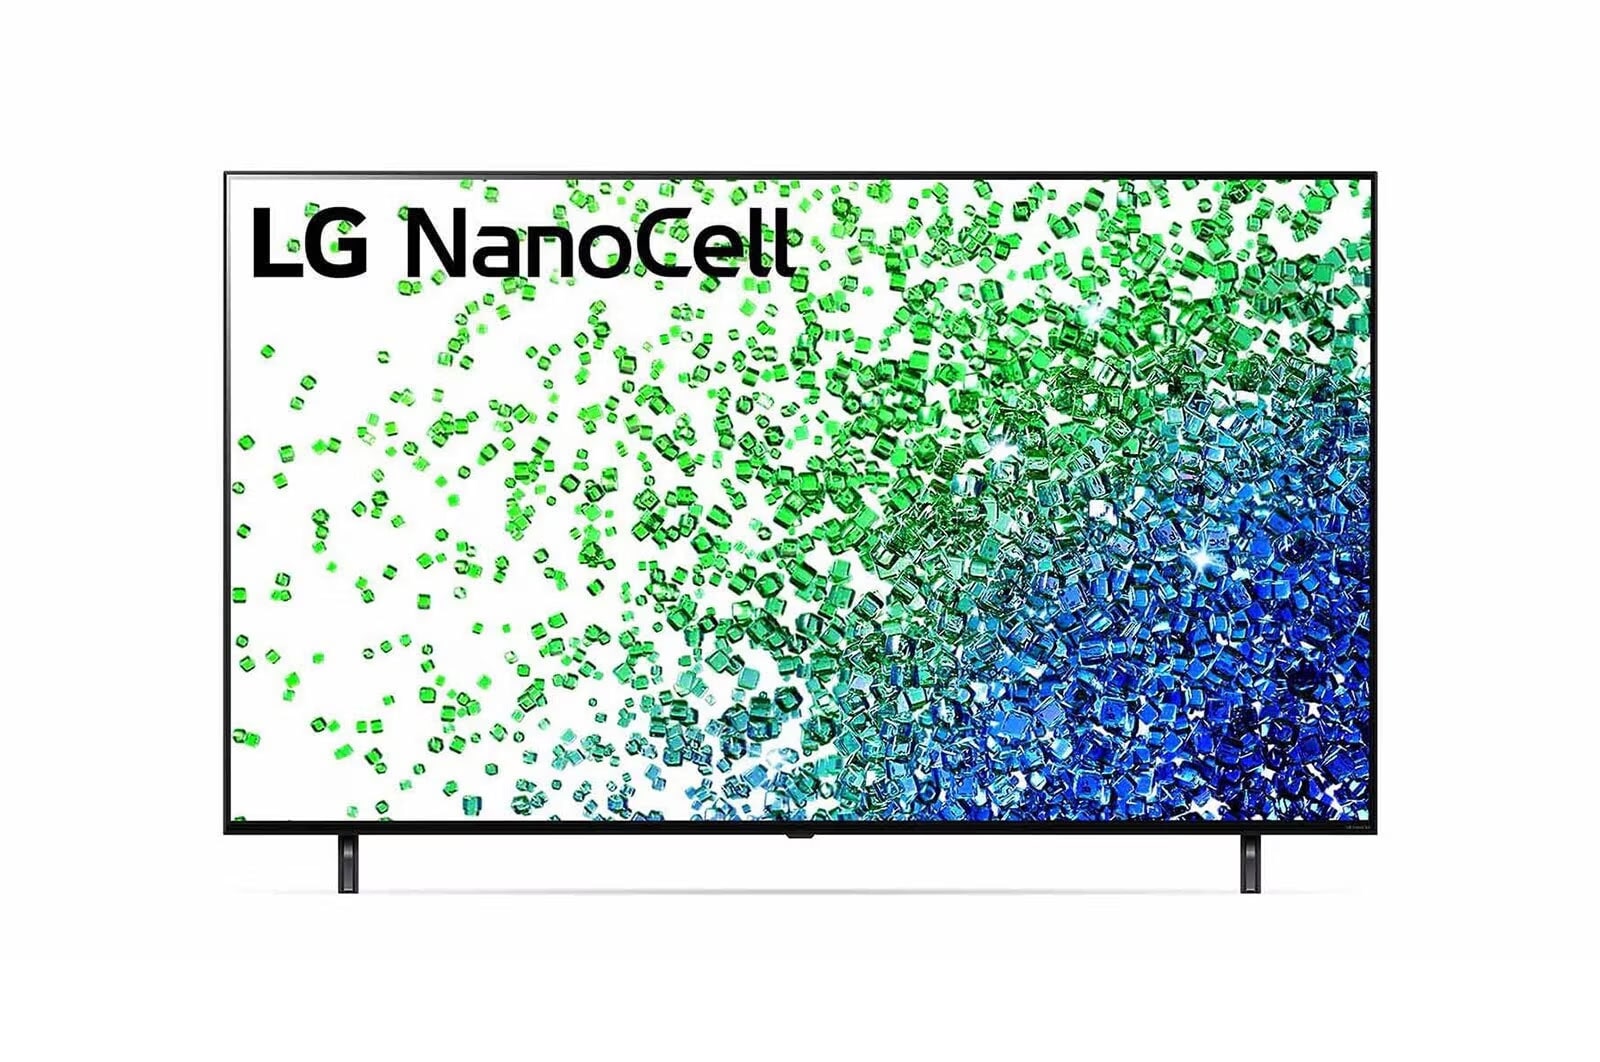 LG NANO80 55 (139cm) 4K NanoCell TV, 55NANO80TPZ